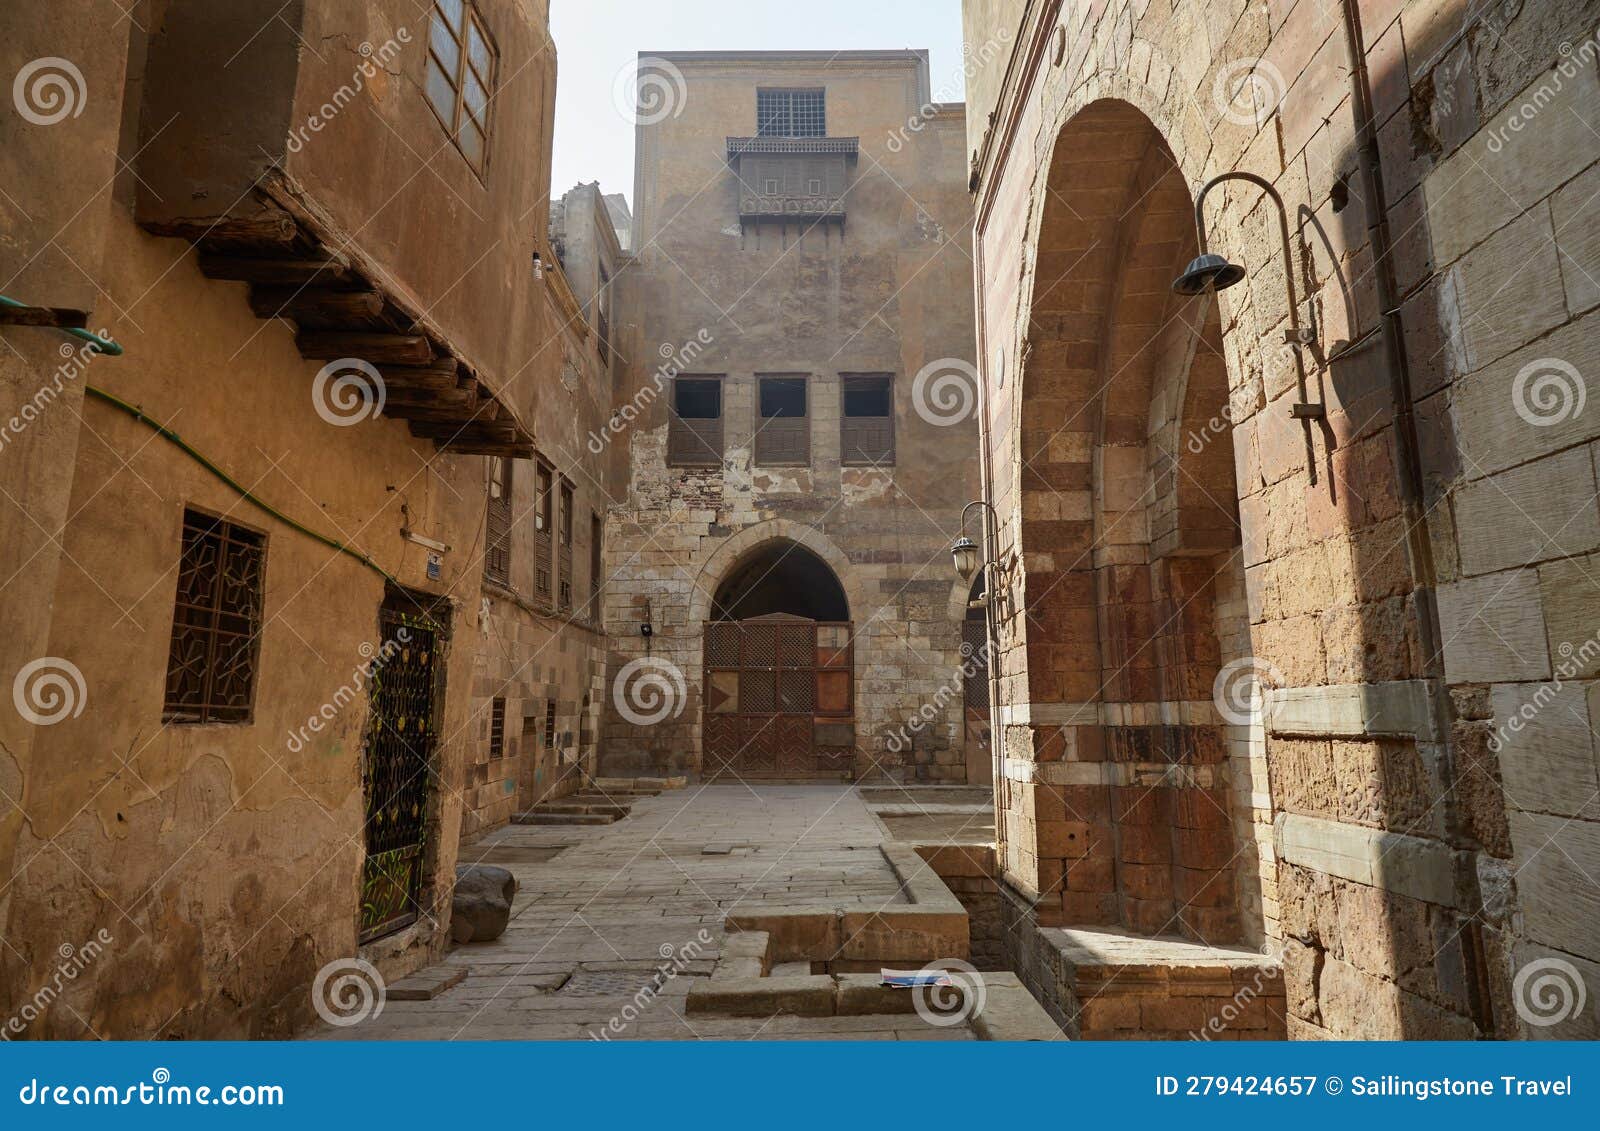 bashtak palace on al-muizz street in old cairo, built during the mamluk era